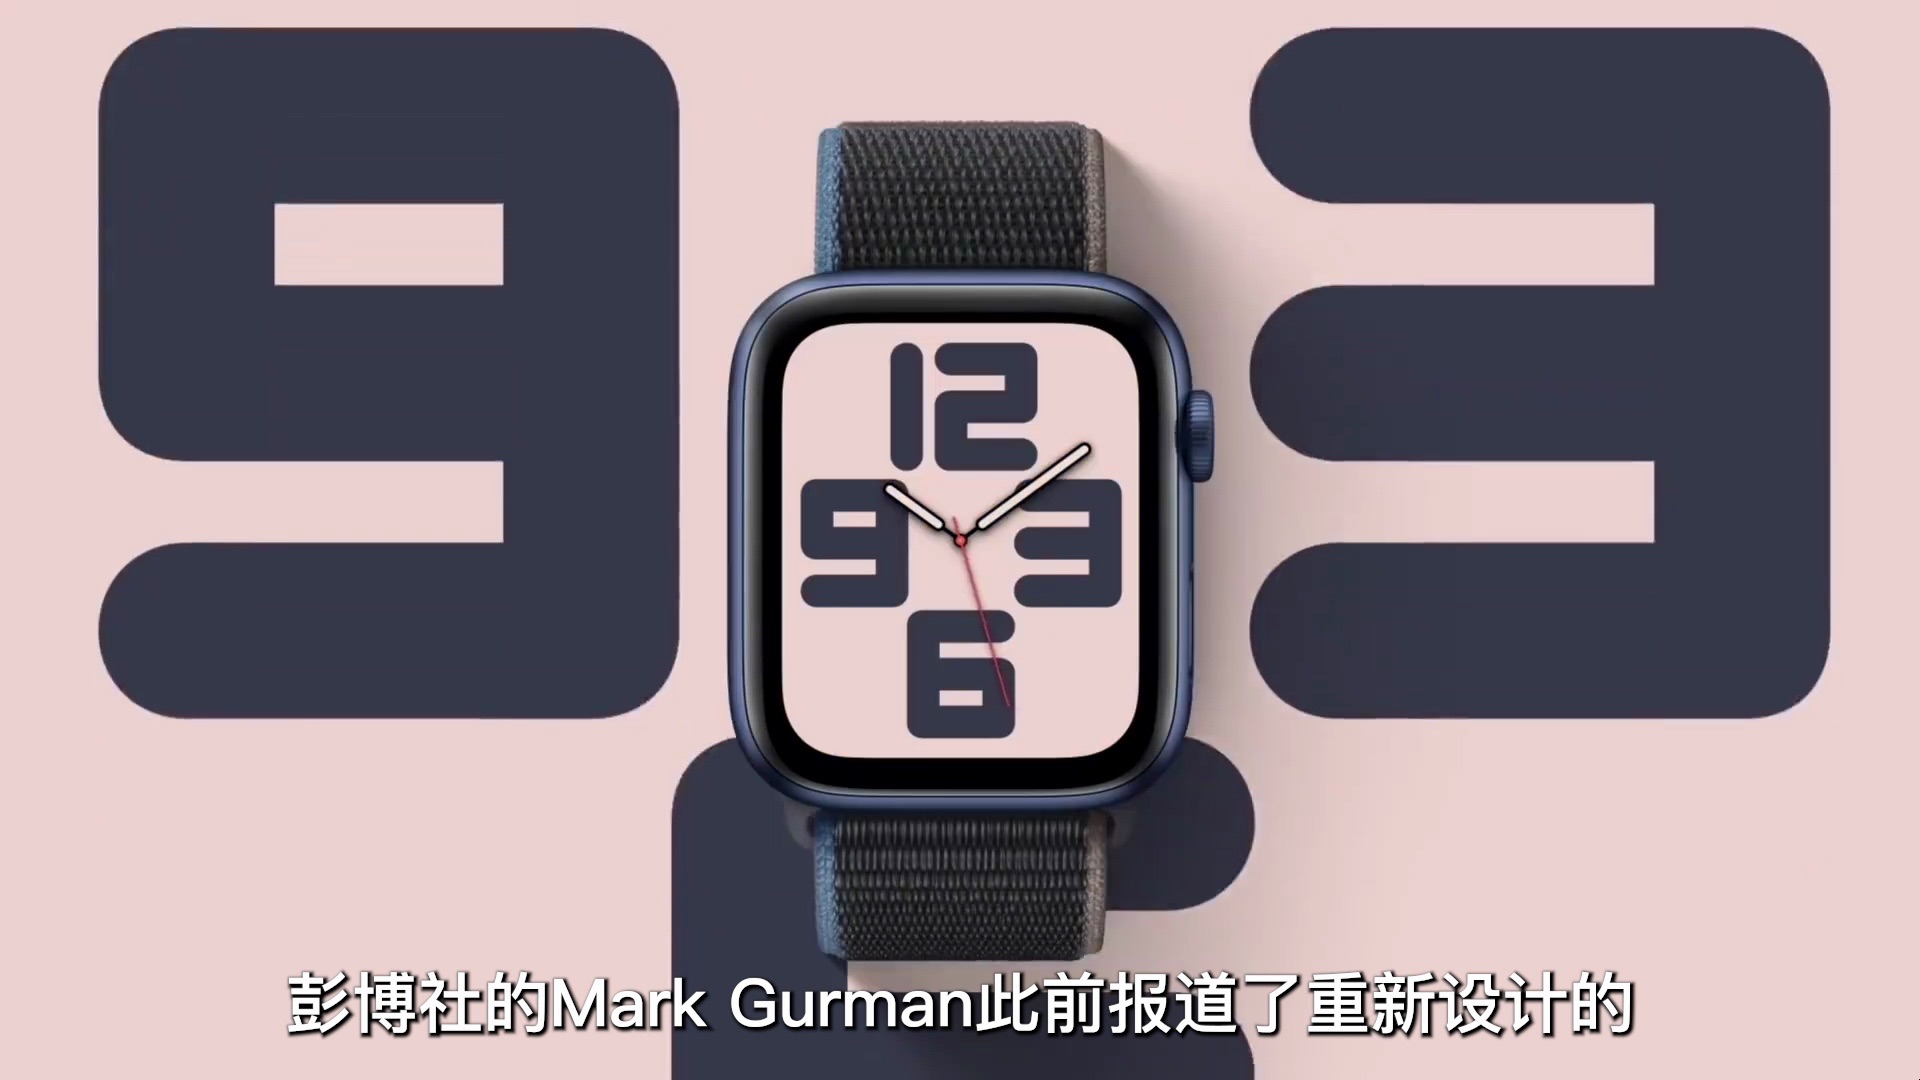 Apple Watch Ultra 3 今年发布,“几乎没有”硬件升级？